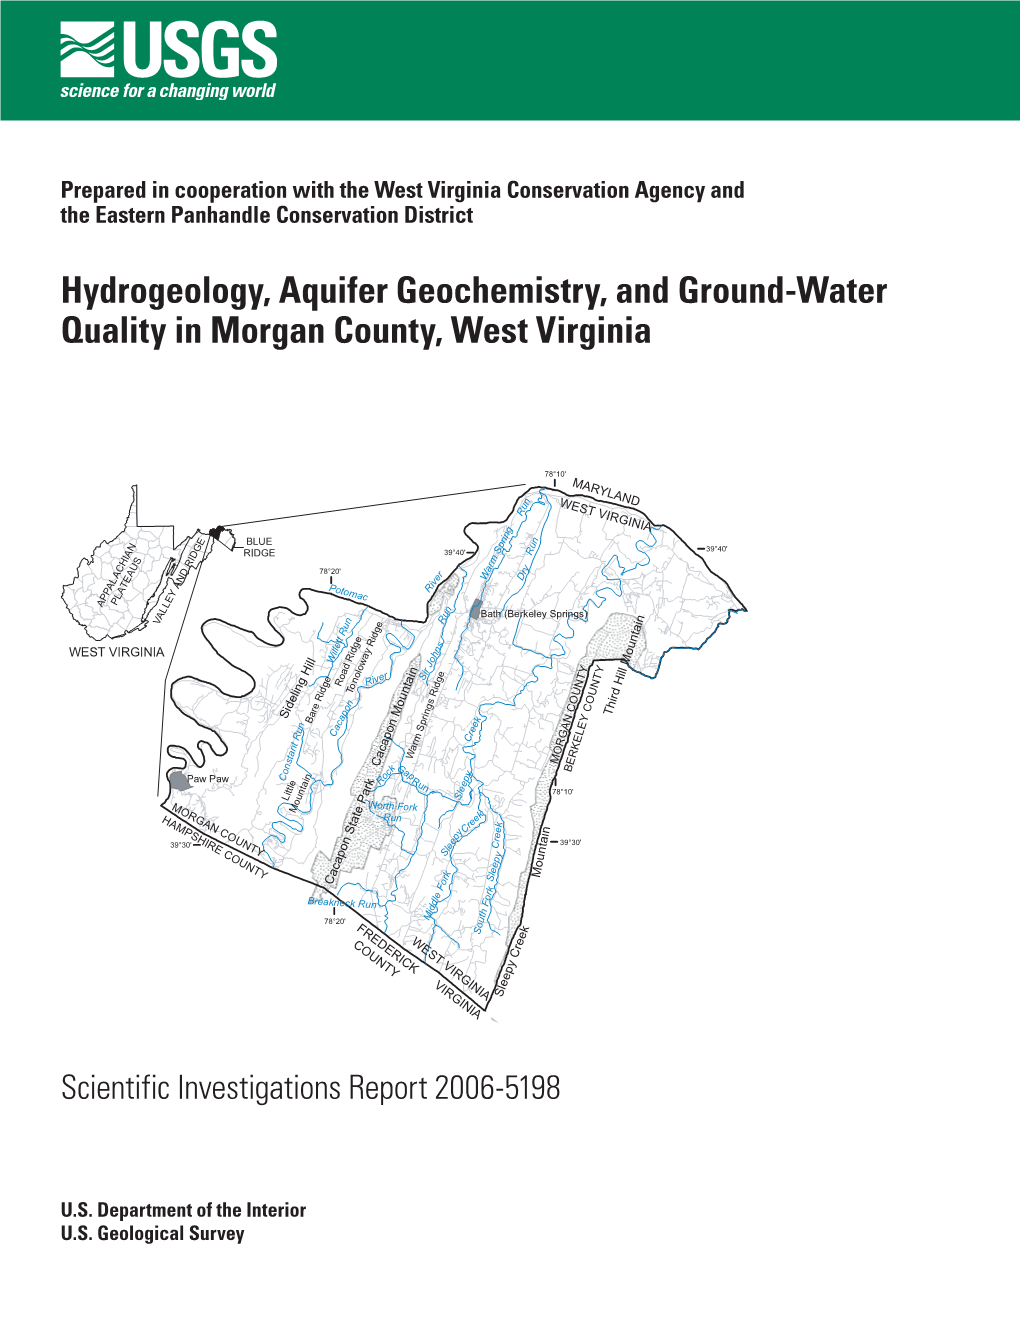 Hydrogeology, Aquifer Geochemistry, and Ground-Water Quality in Morgan County, West Virginia